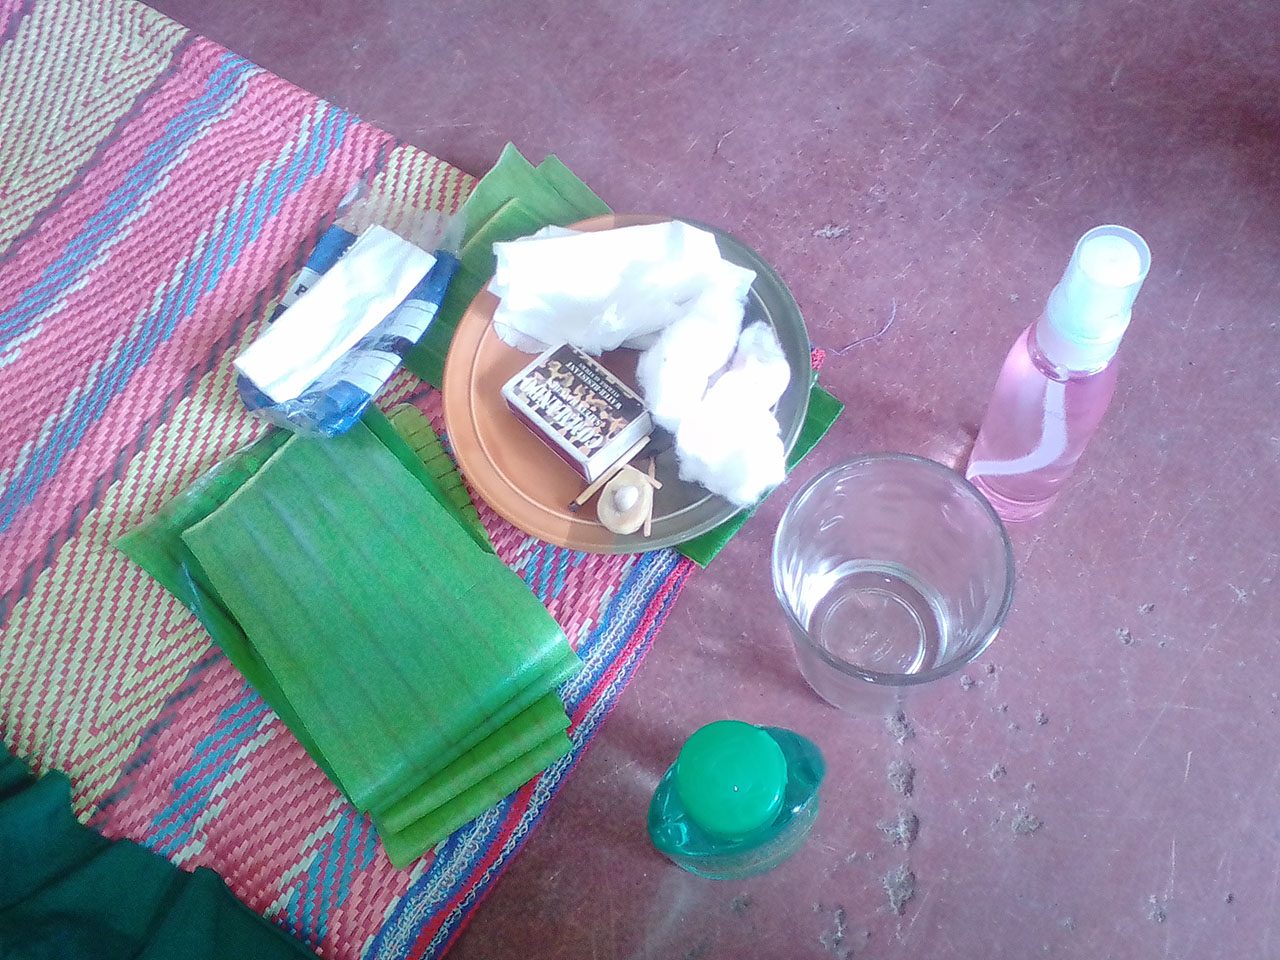 MASSAGE KIT. Cotton, tissue, banana strips, ginger, massage oil. Photo by Mavic Conde 